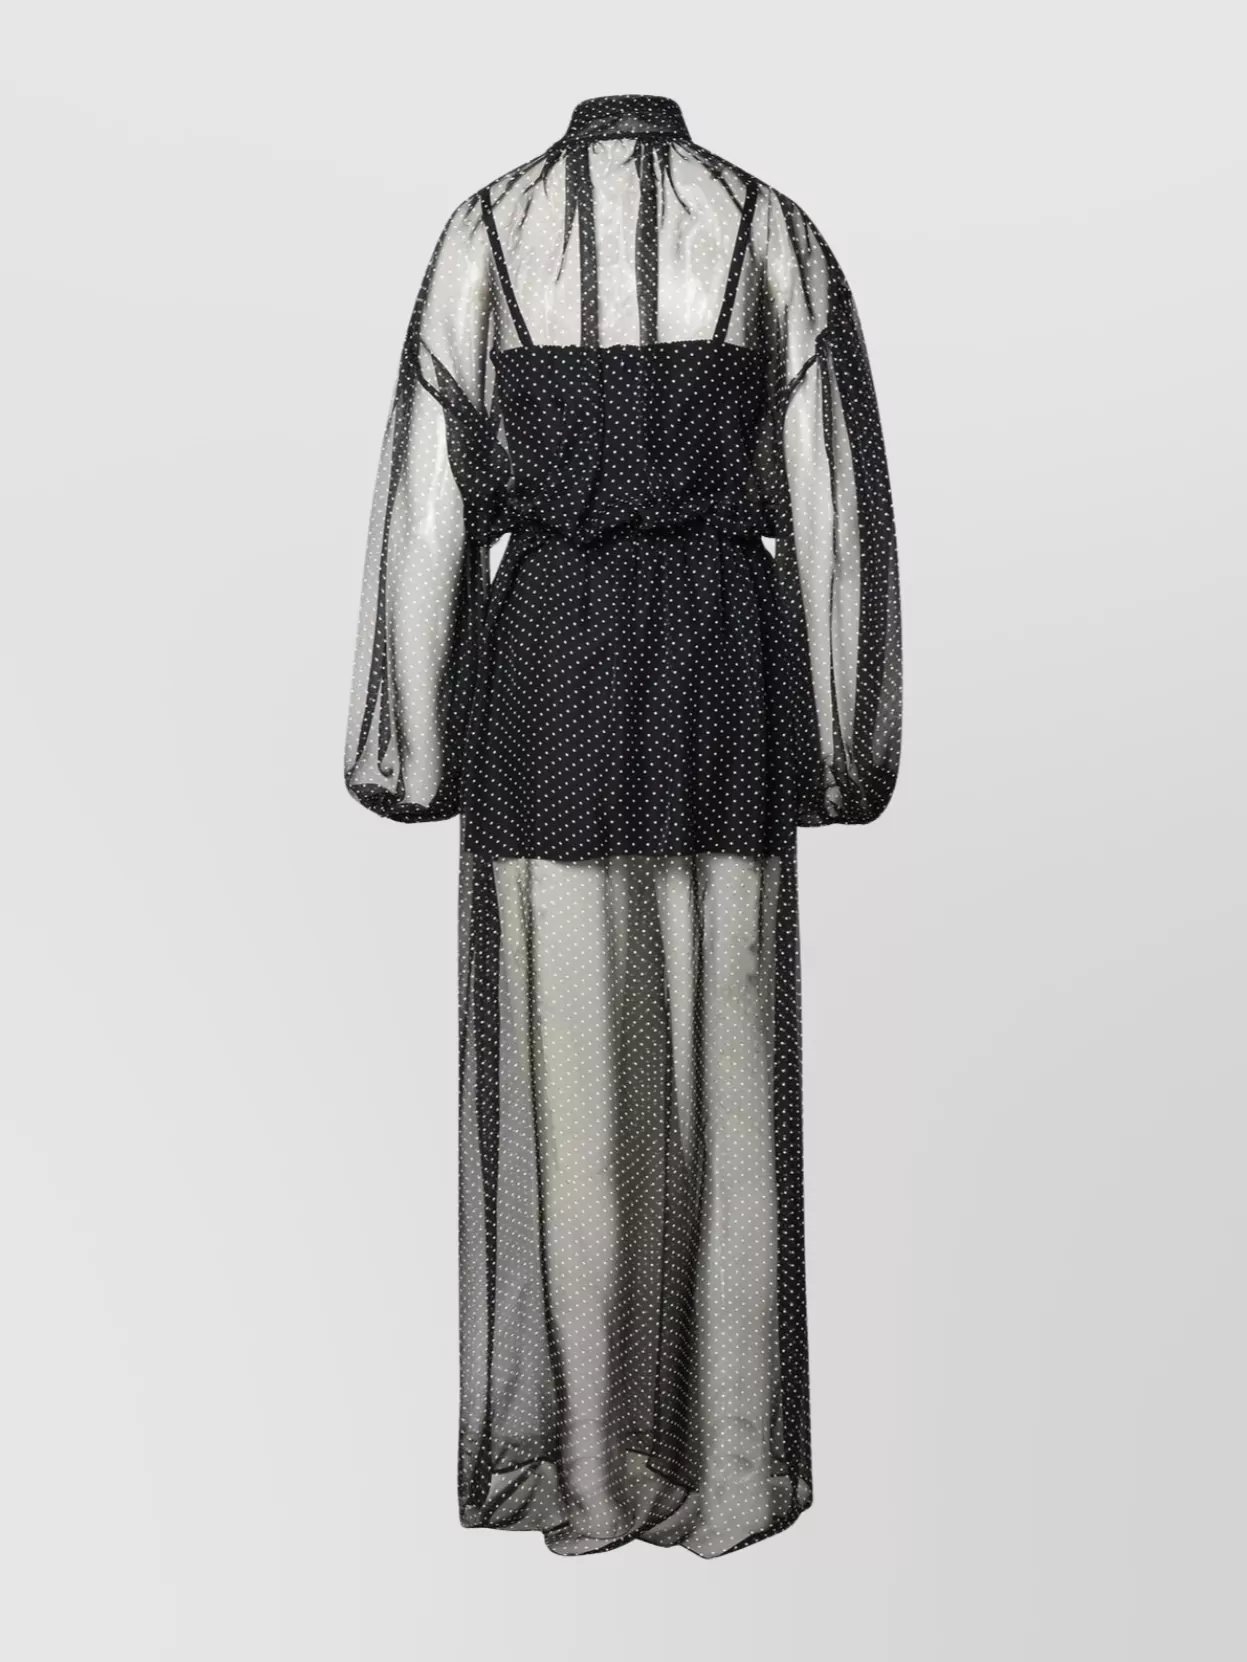 Dolce & Gabbana Silk Dress With Bishop Sleeves And Polka Dot Pattern